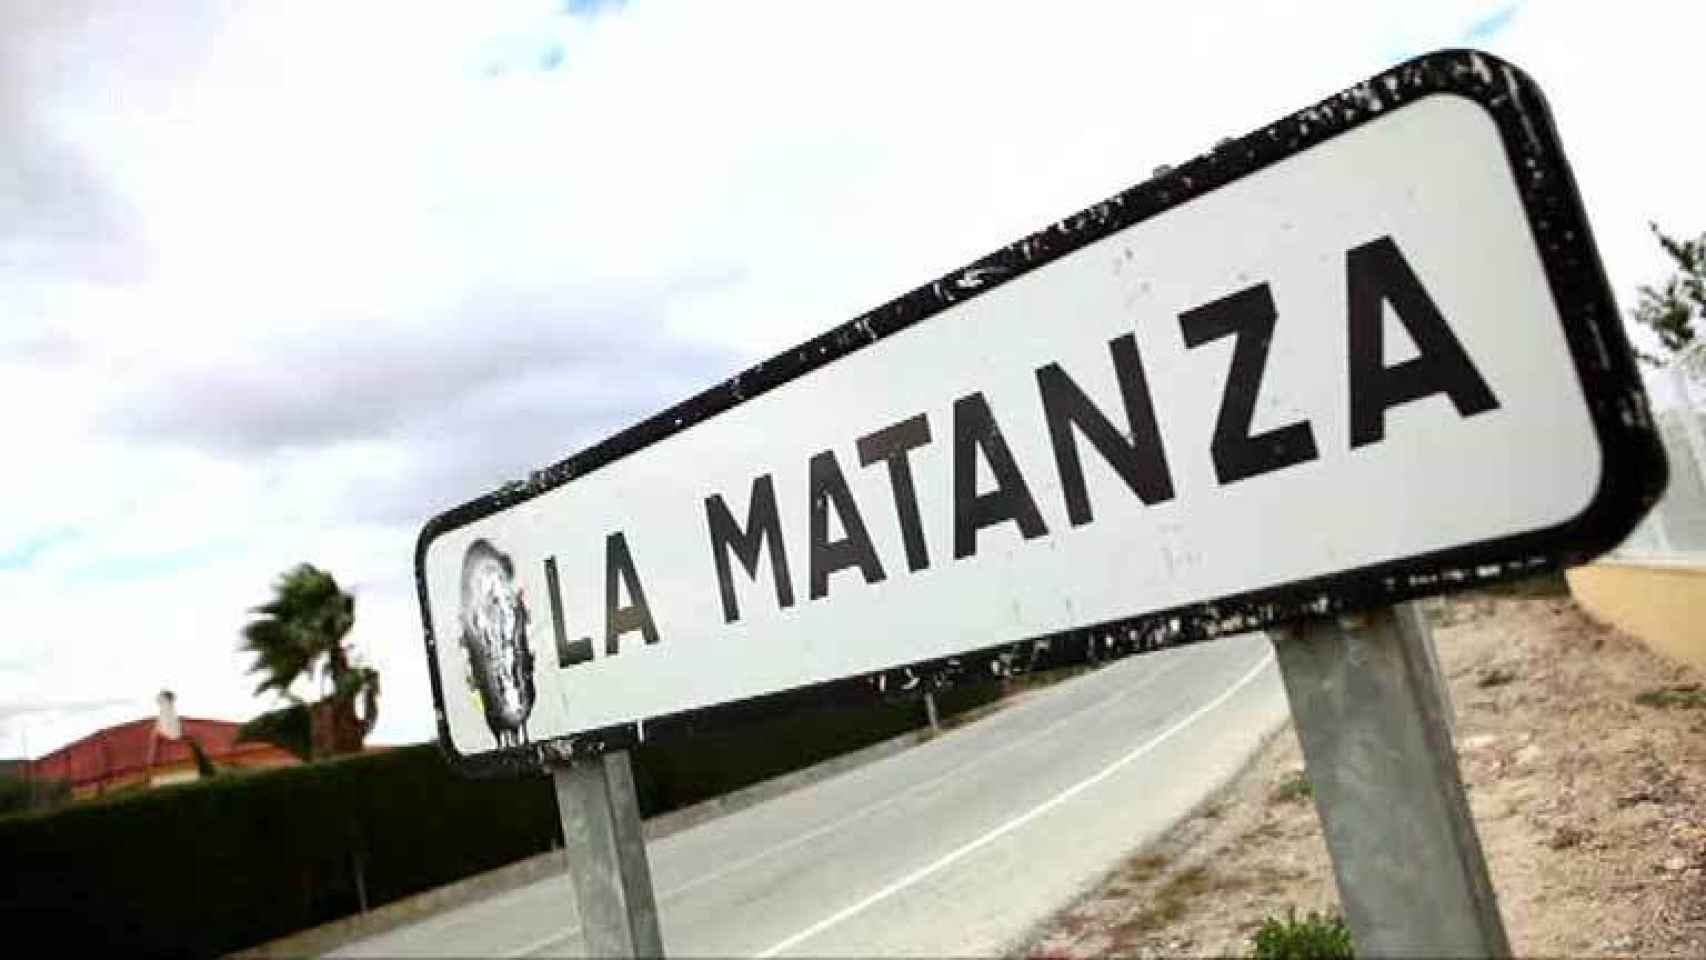 El cartel de entrada a La Matanza.